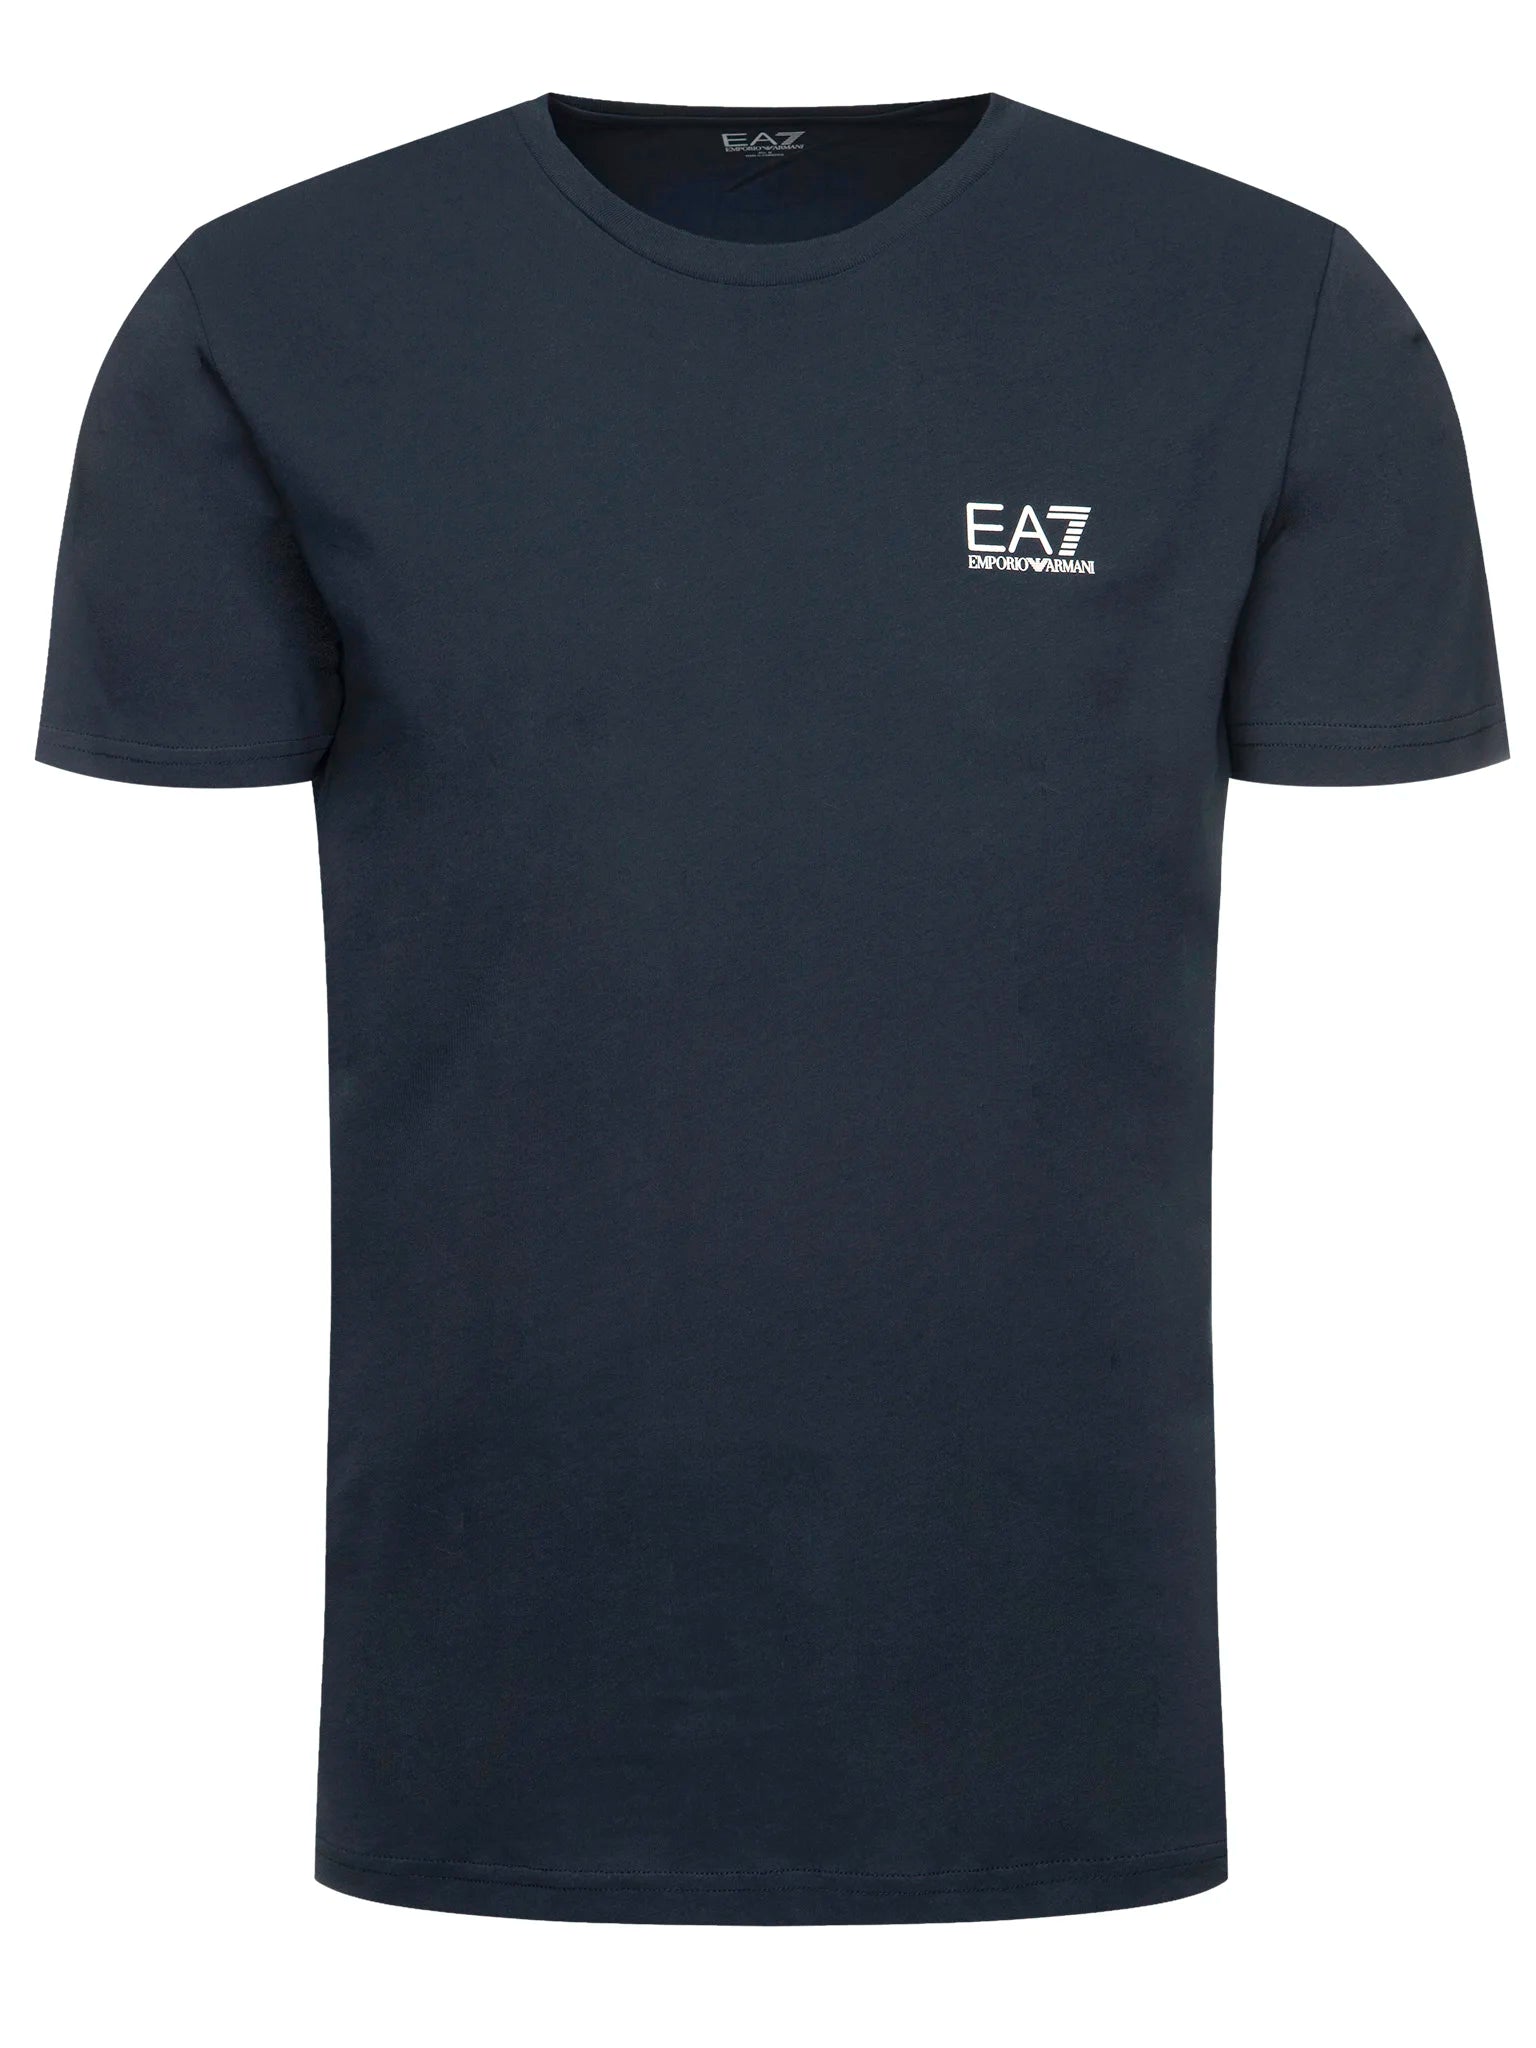 EA7 Emporio Armani men's t-shirt